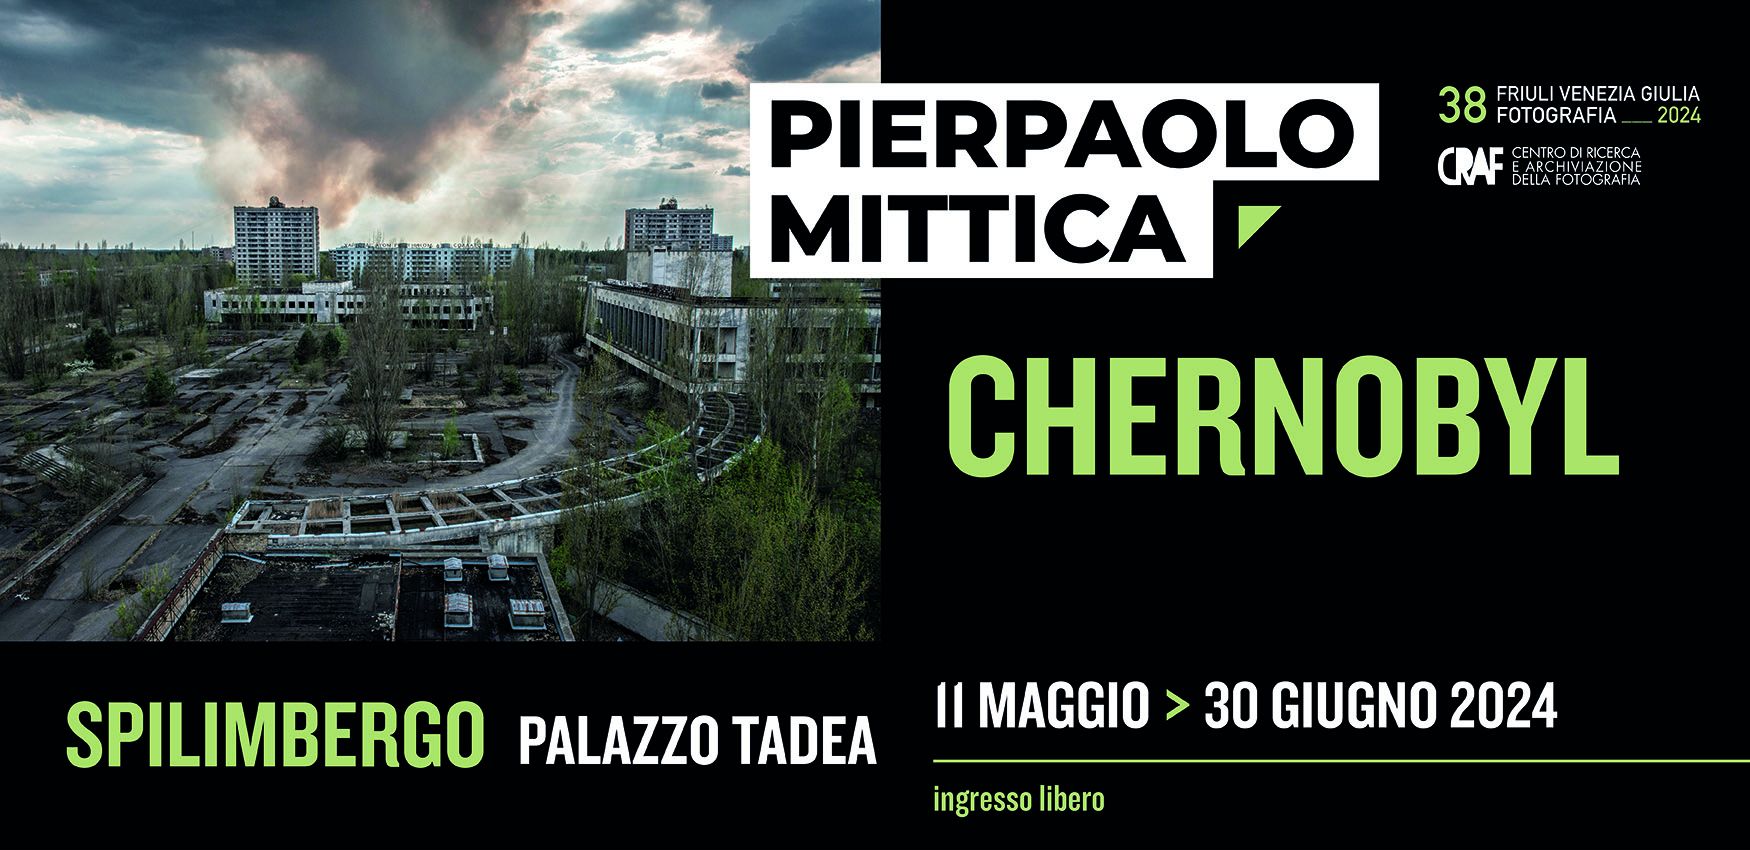 Pierpaolo Mittica - Chernobyl